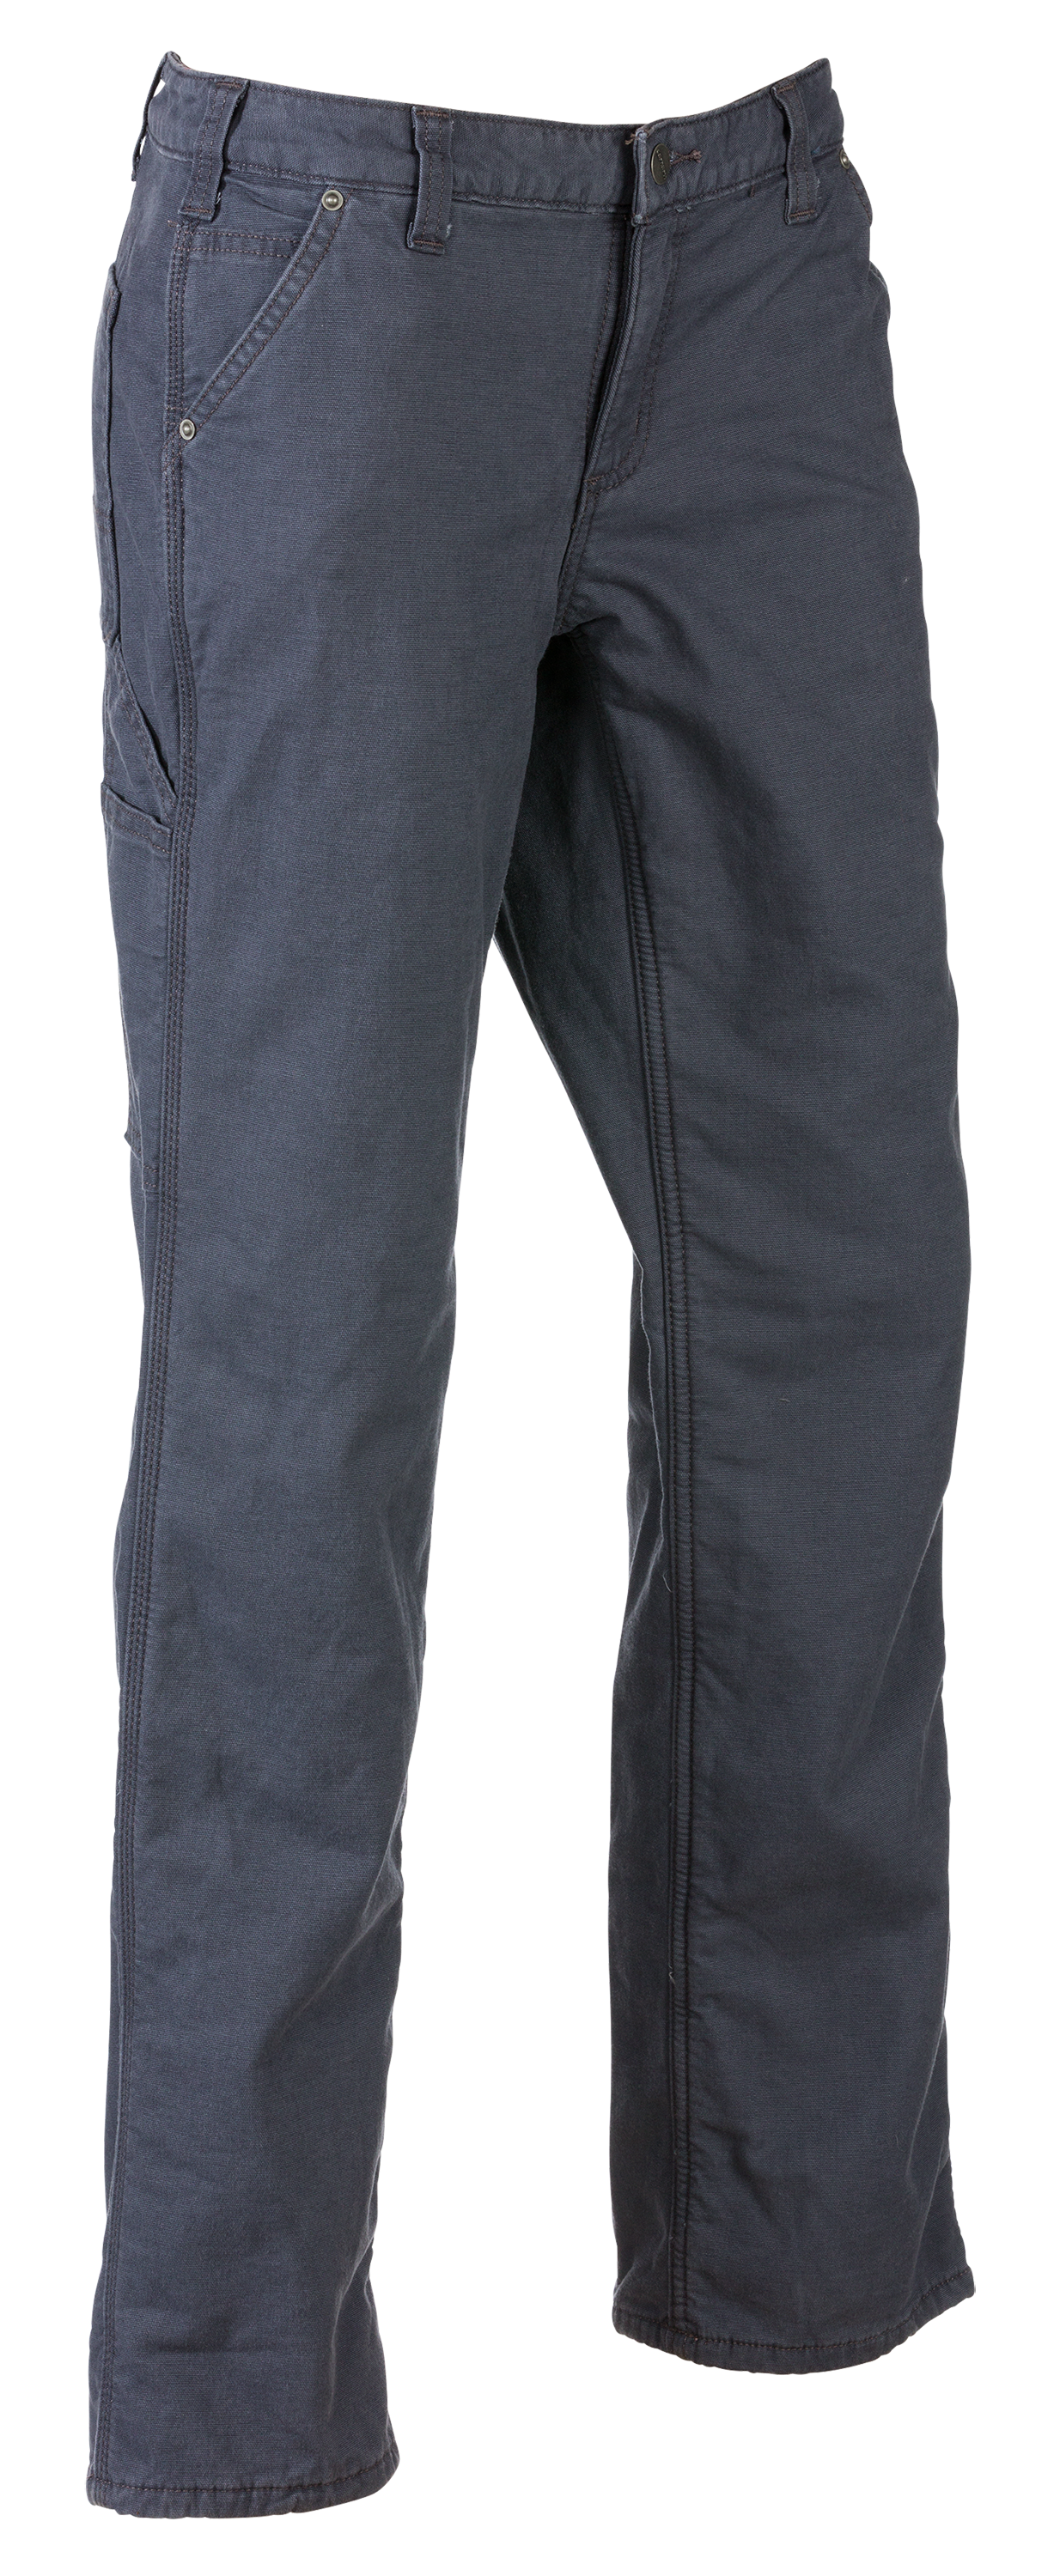 Carhartt Women's Crawford Fleece-Lined Pants, Size 10